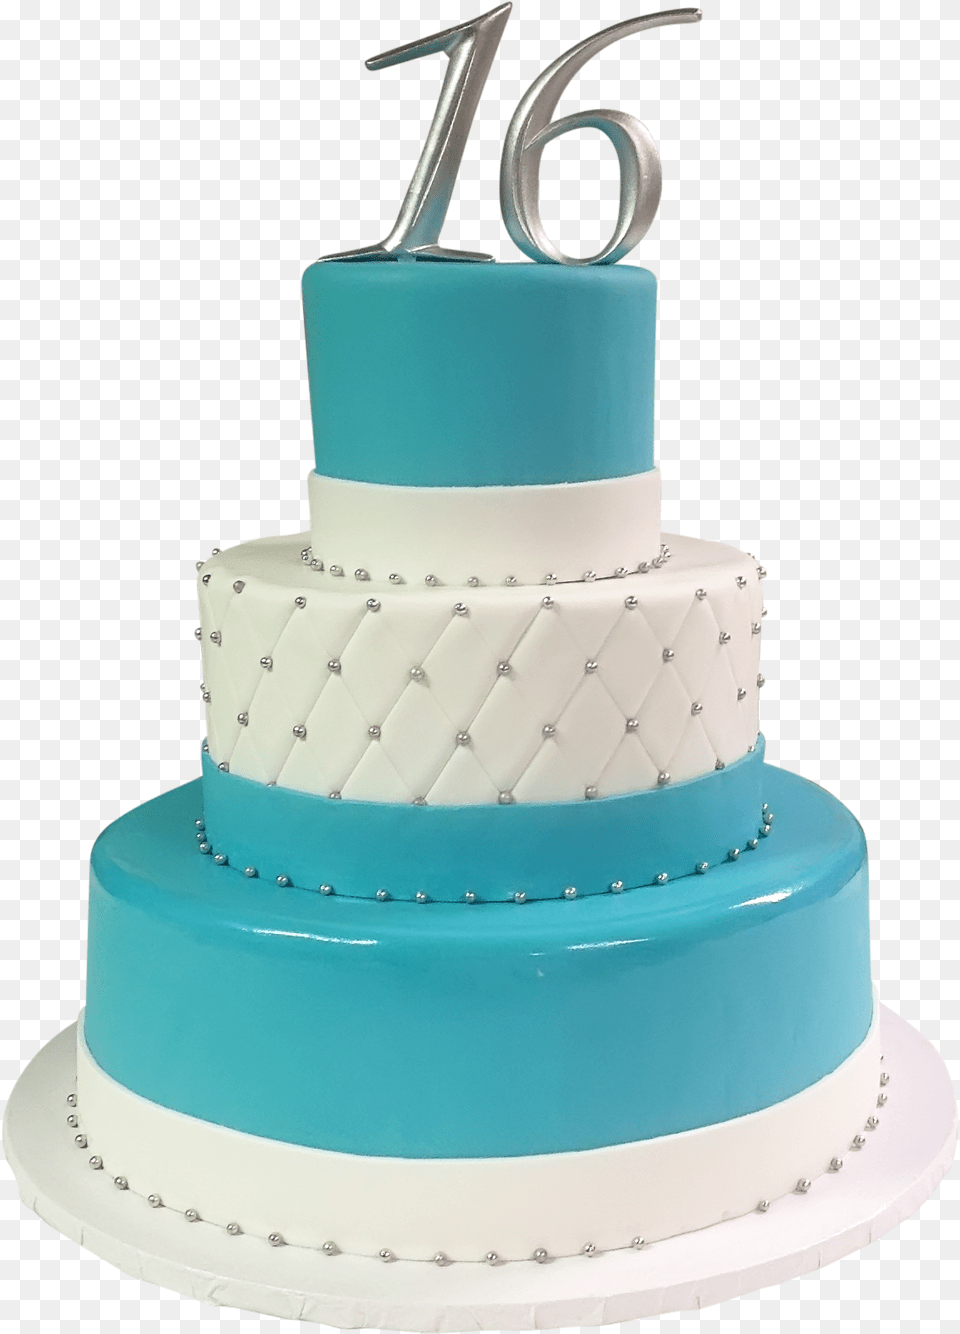 Download Hd 16 Birthday Cake Transparent Birthday Cartoon Sheet Cake, Dessert, Food, Birthday Cake, Cream Png Image